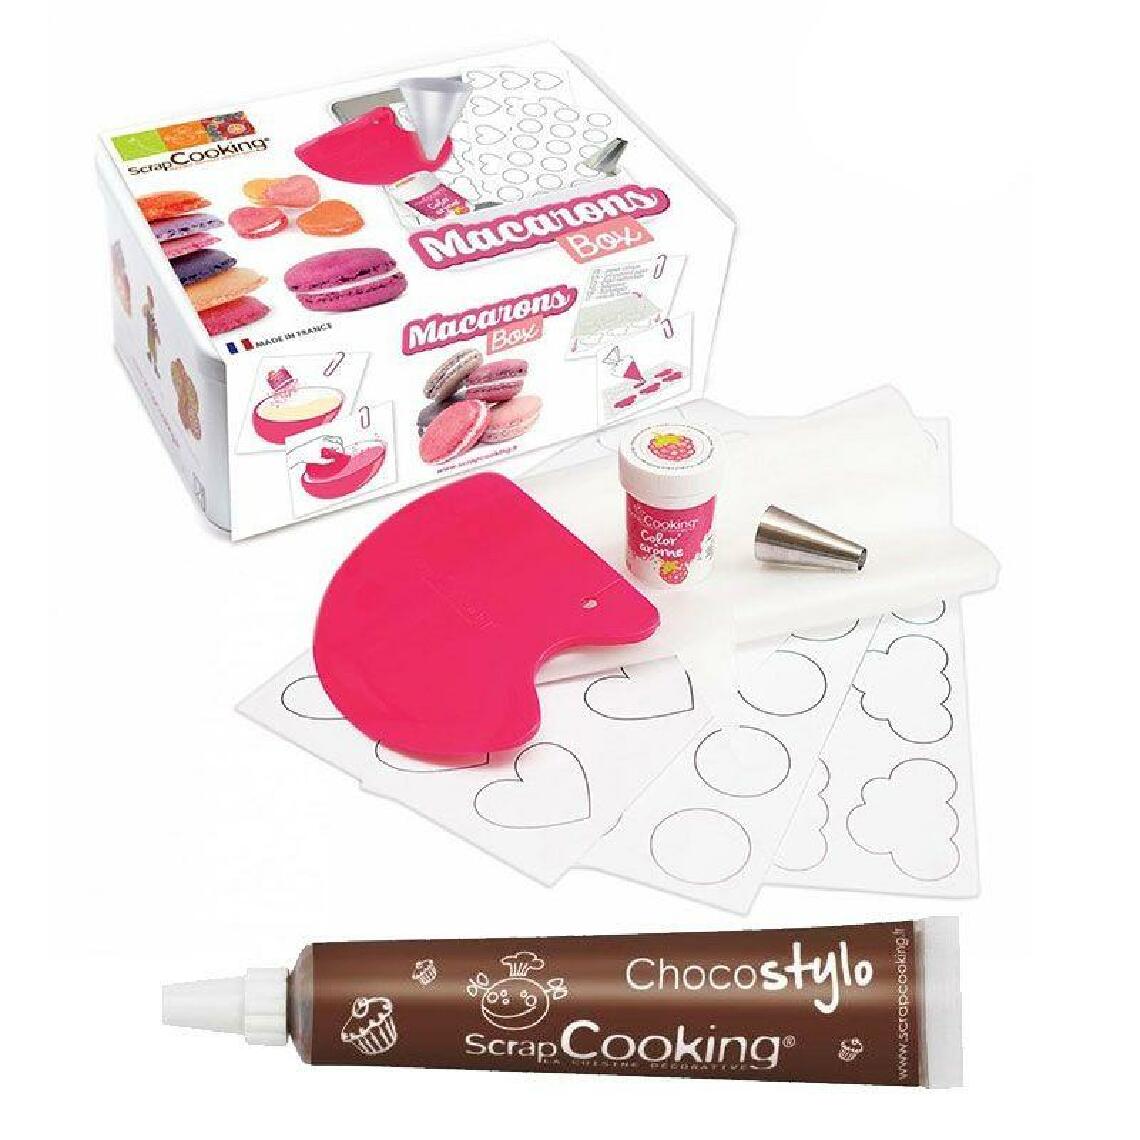 Scrapcooking - Kit pour macarons + 1 Stylo chocolat offert - Kits créatifs